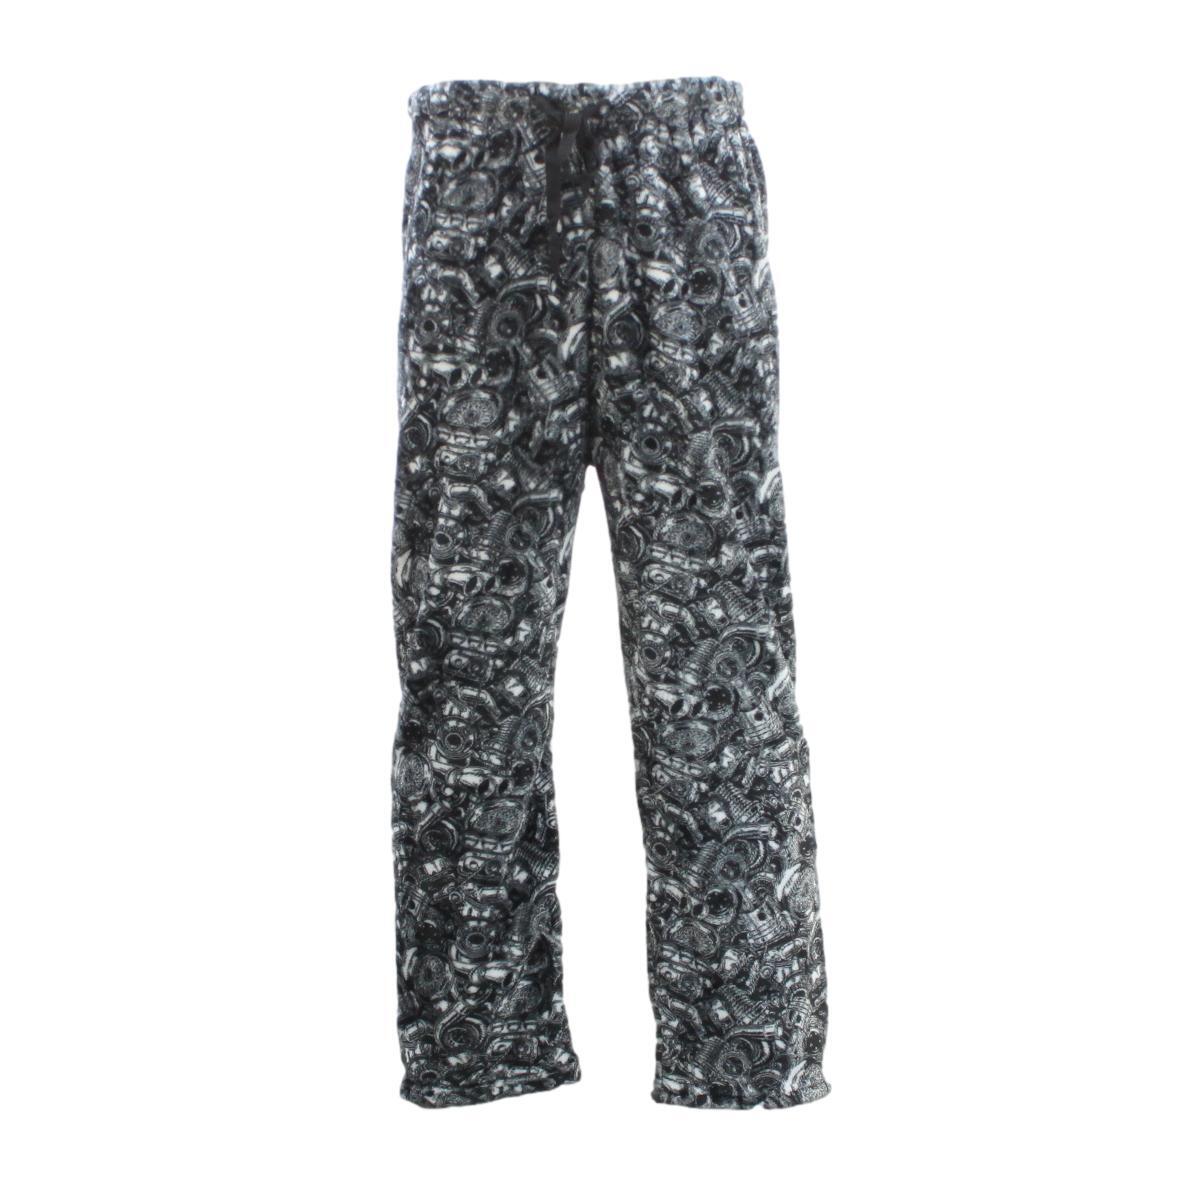 Soft Plush Pajama Pants - Grey